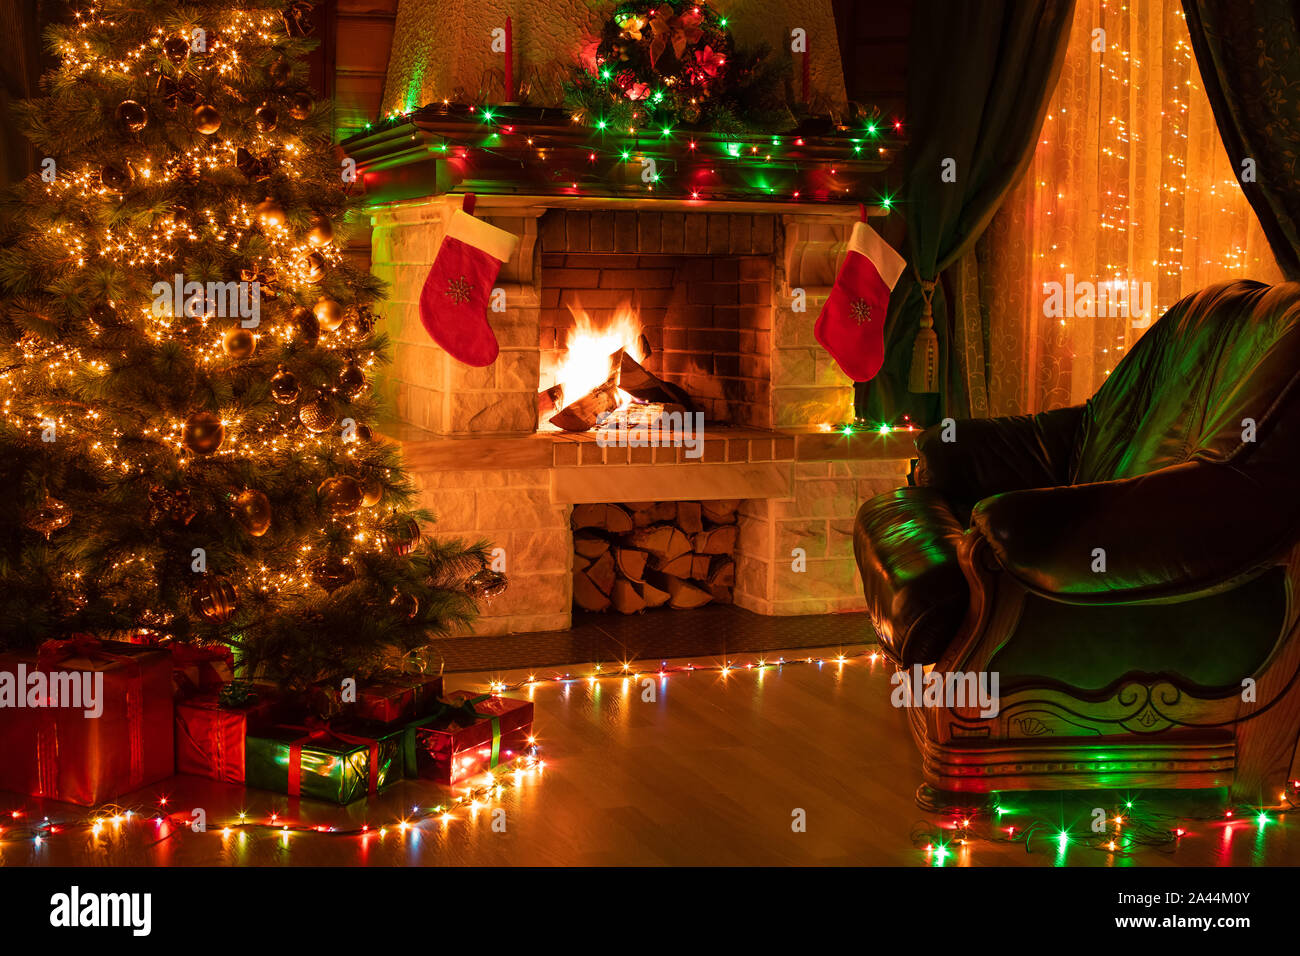 Christmas decorated dark living room interior with fireplace, armchair, window and xmas tree Stock Photo